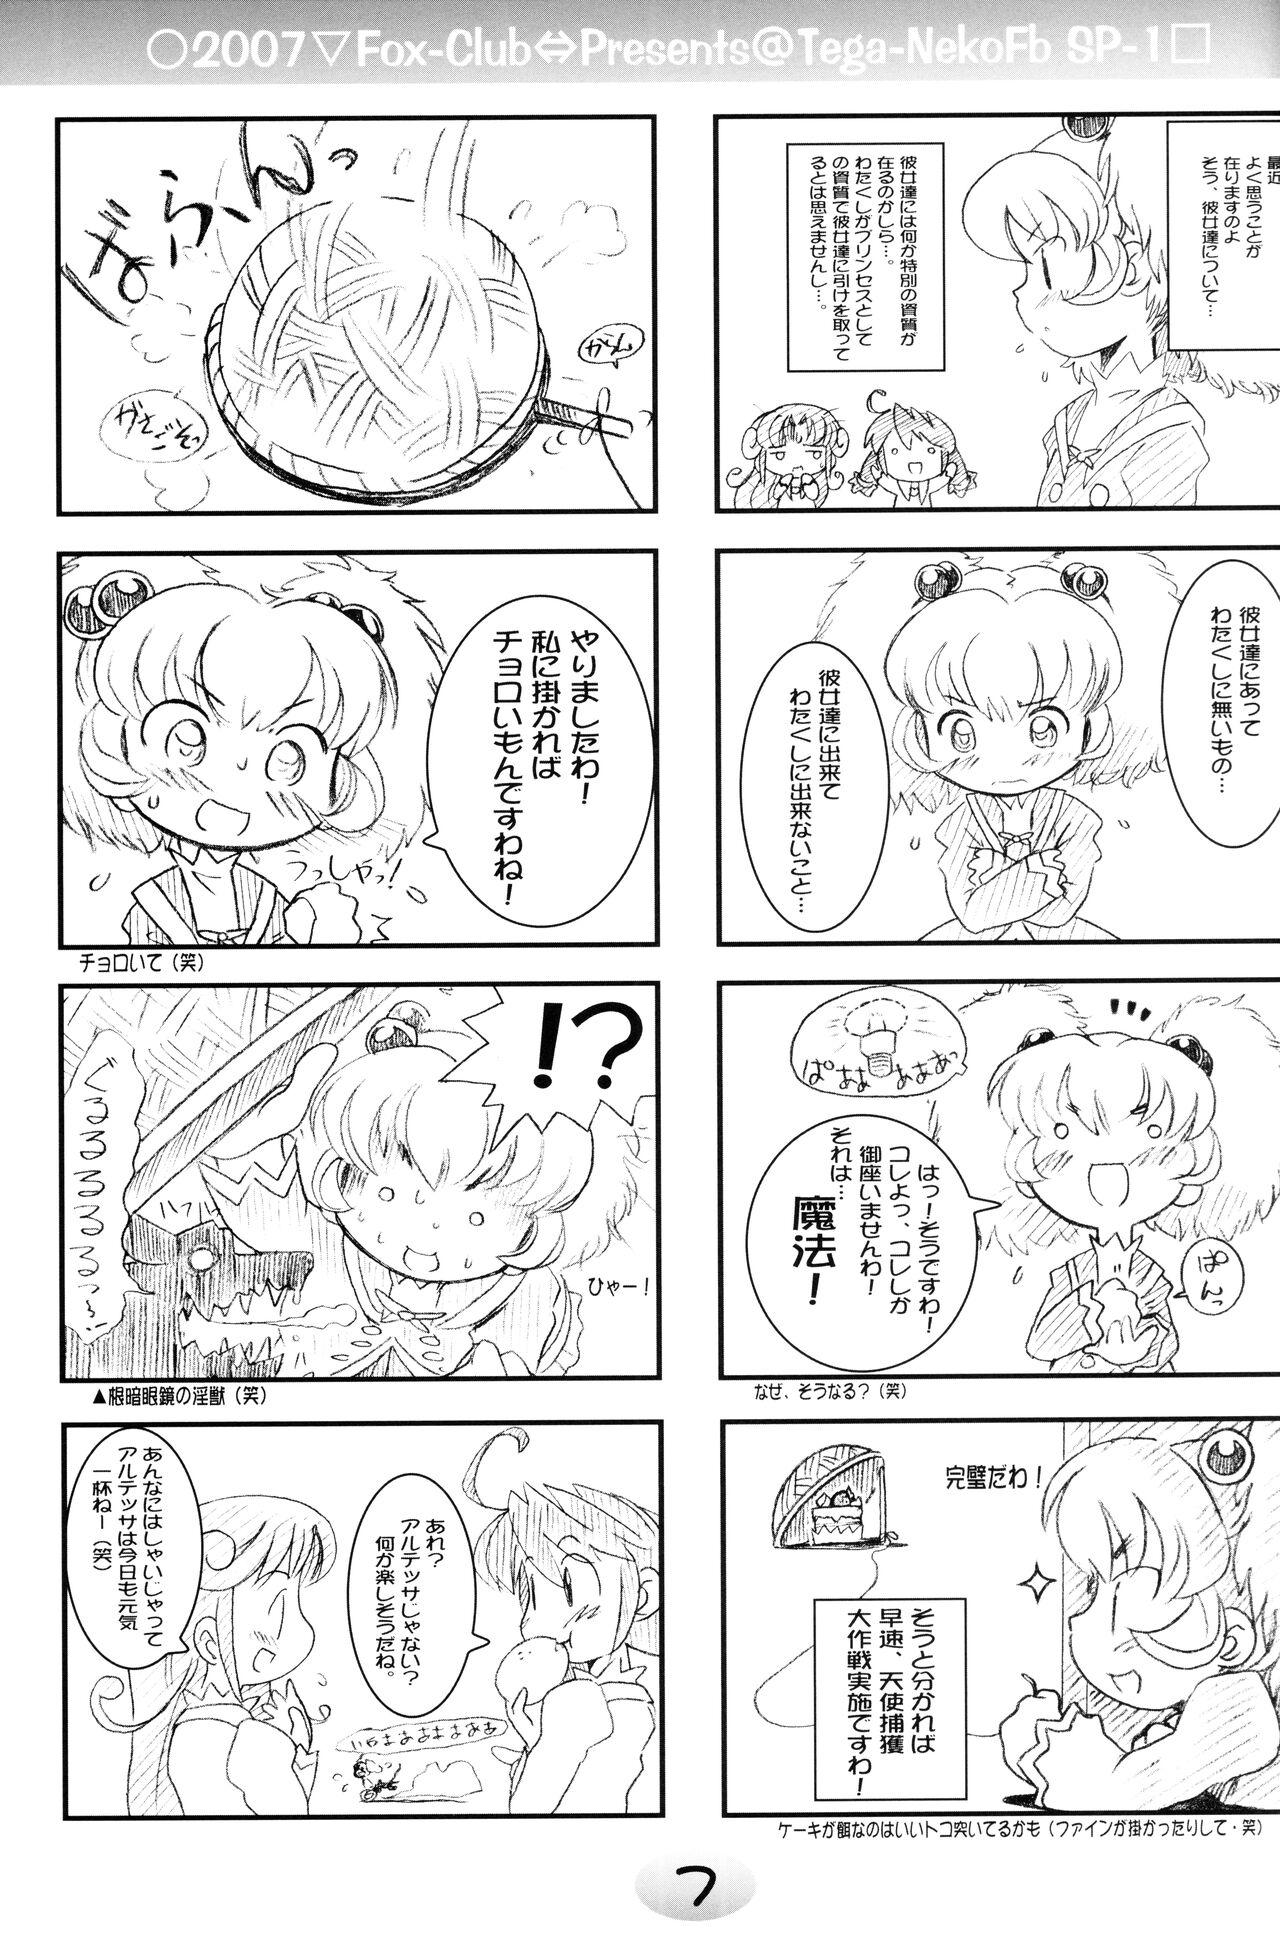 Ethnic TeGa-NeKo Fb/SP Futago Hime Plus - Fushigiboshi no futagohime | twin princesses of the wonder planet Gaping - Page 5